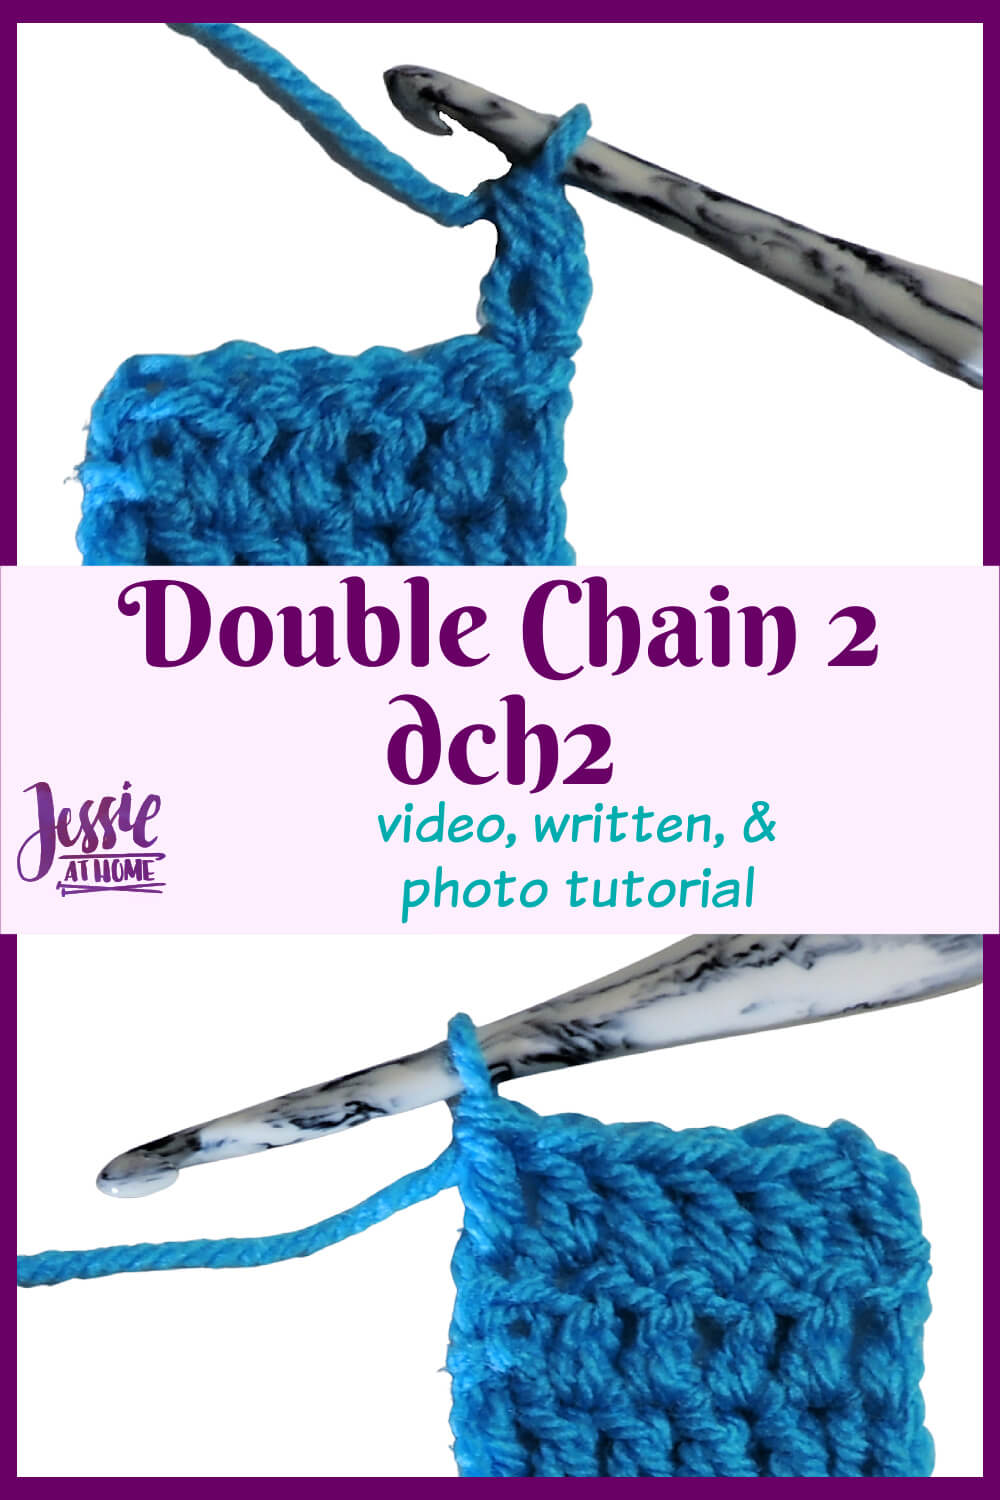 DCH2 Double Chain Two Stitchopedia - Video, Photo, & Written Tutorial